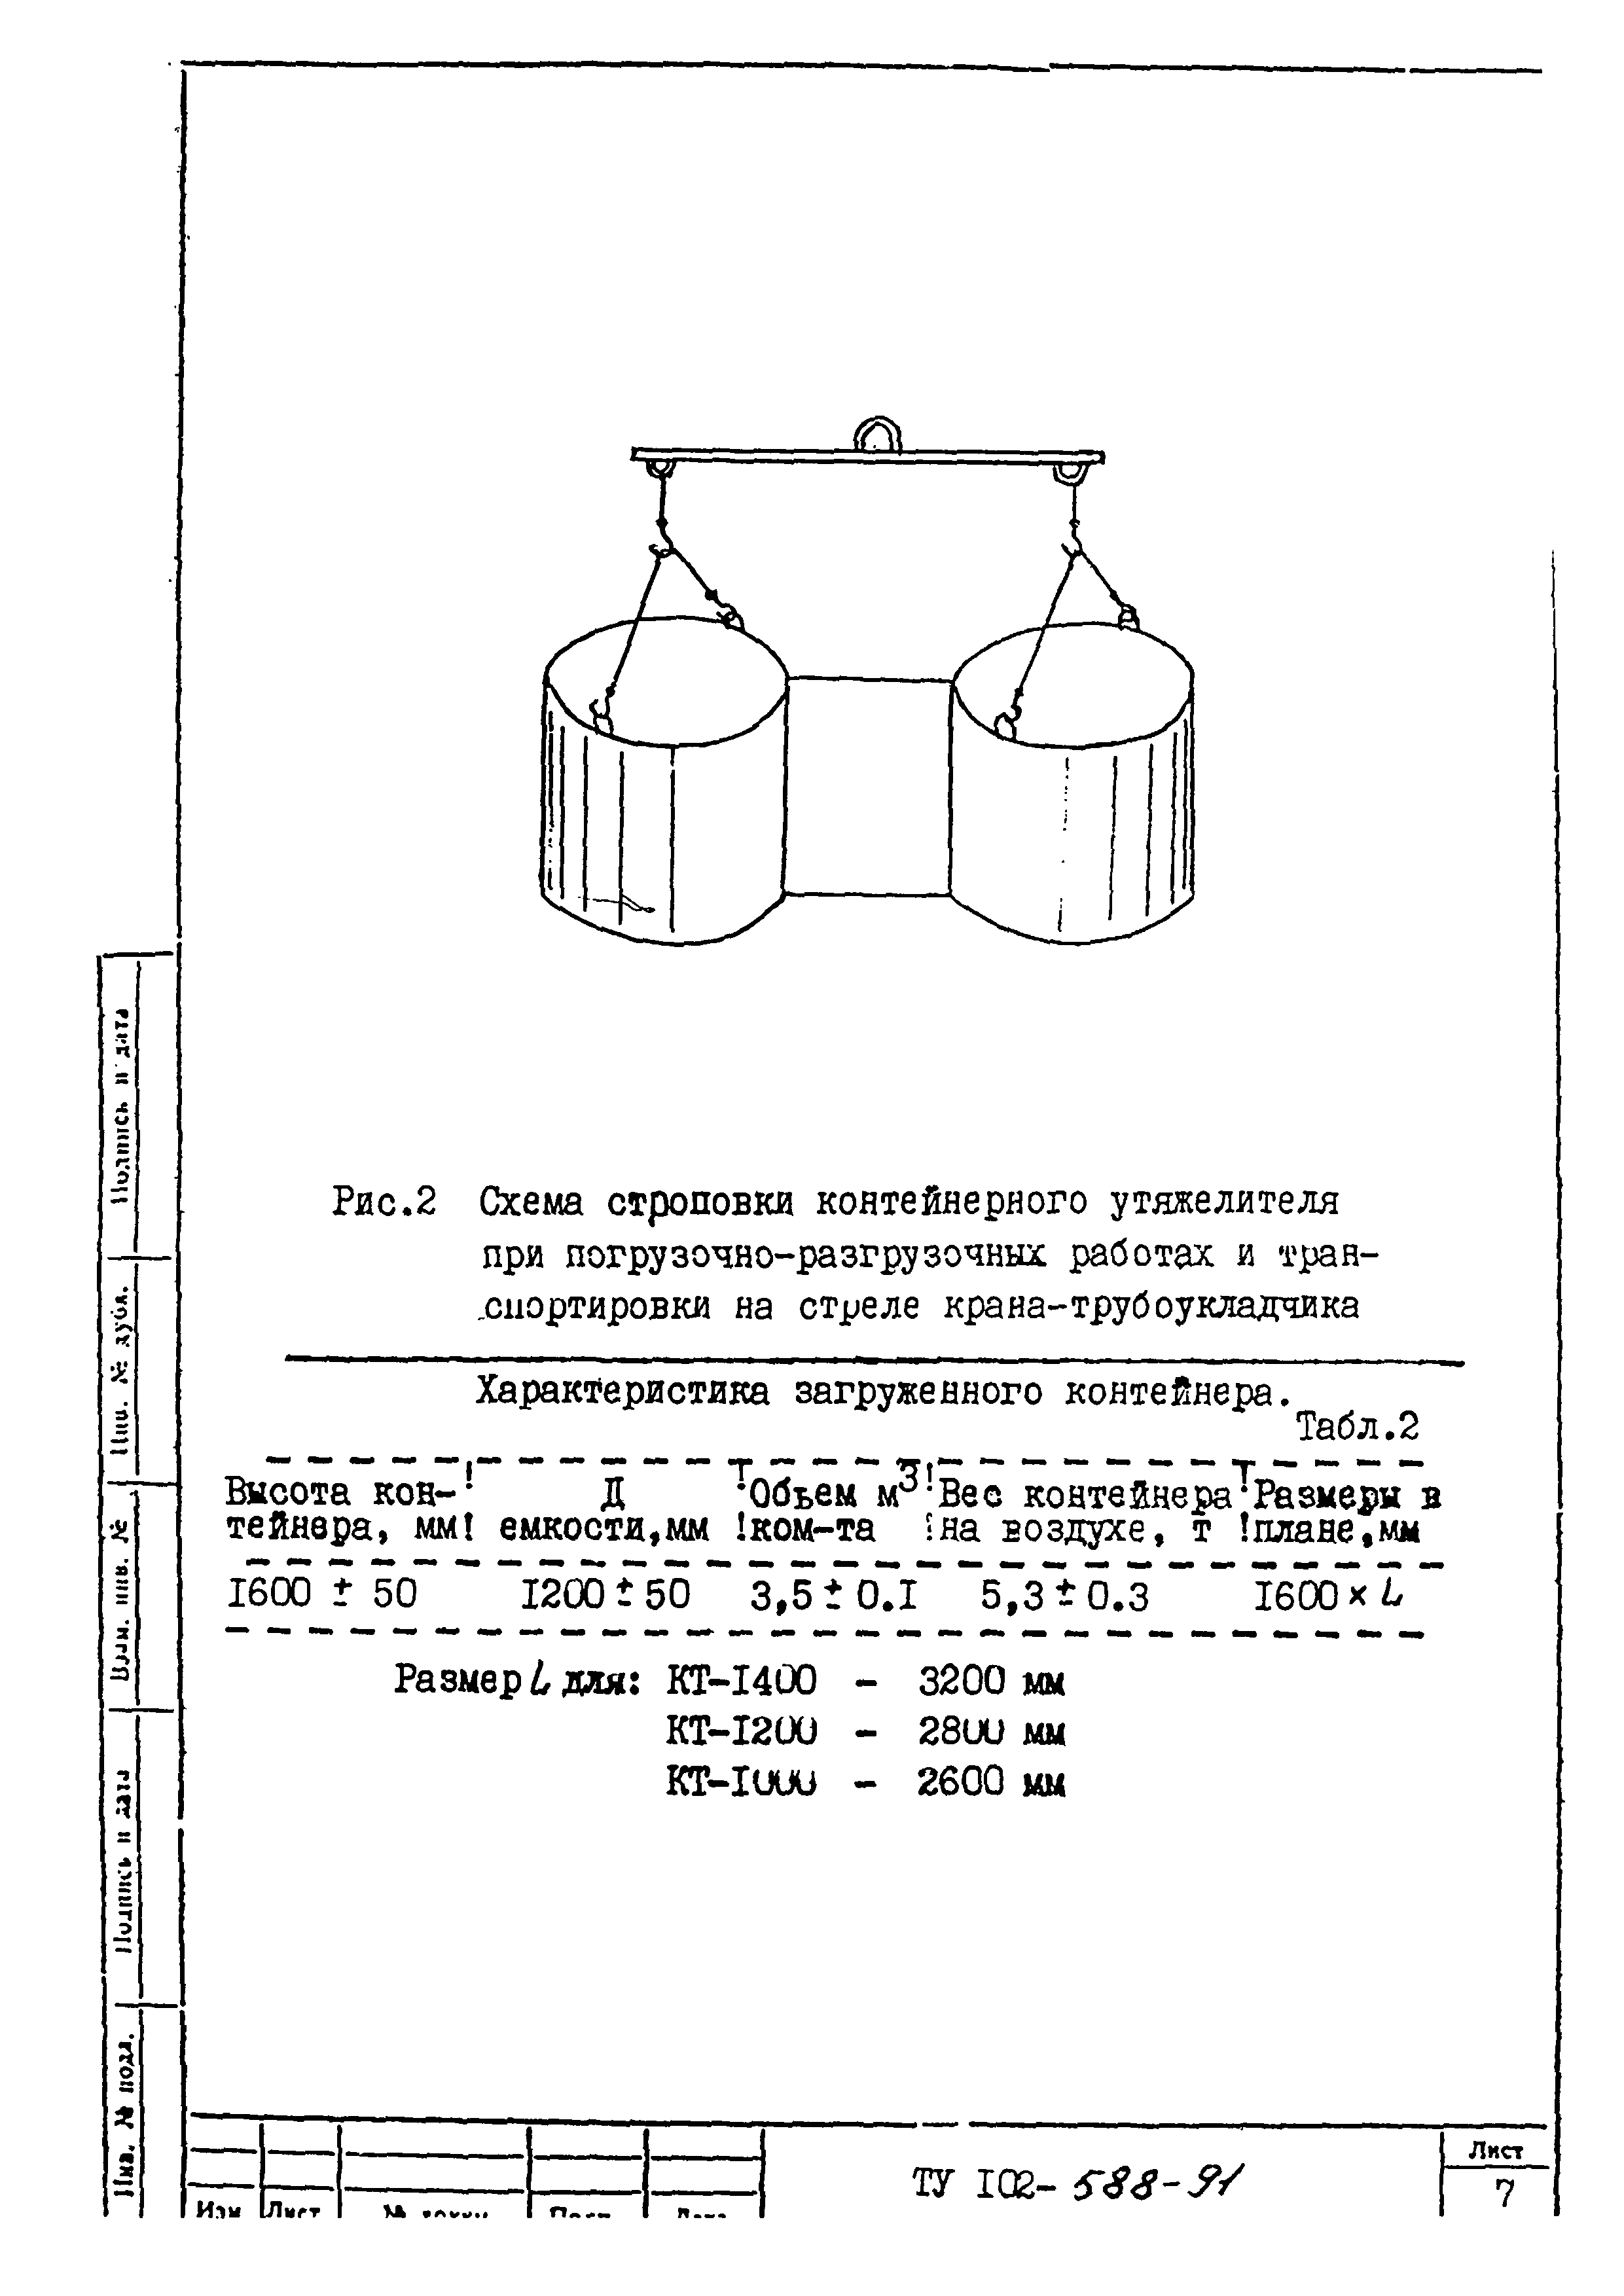 ТУ 102-588-91